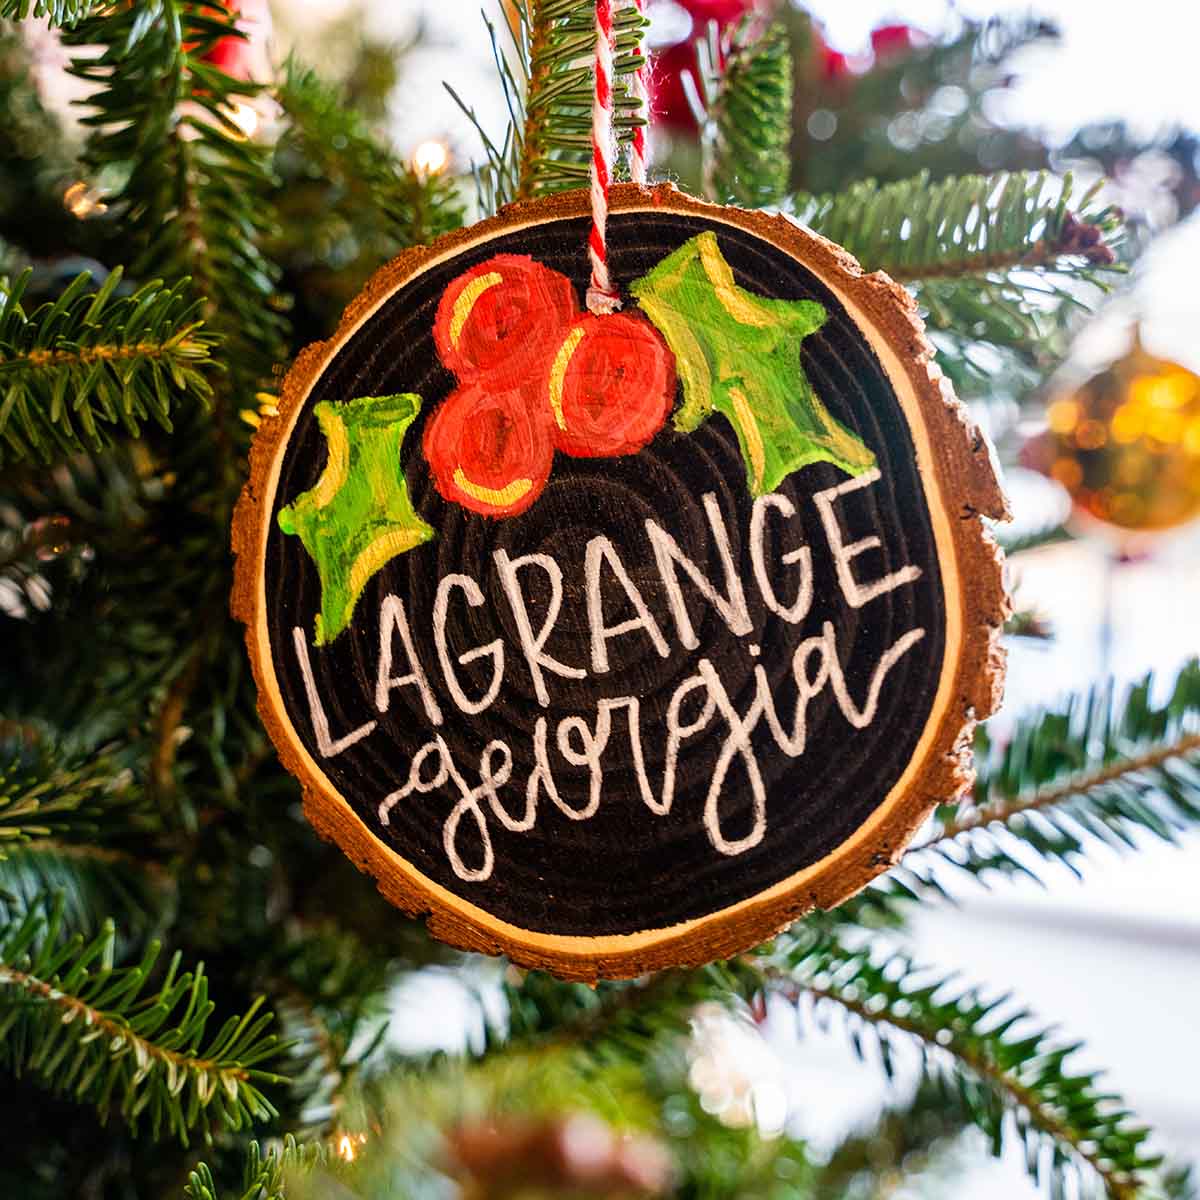 A Christmas ornament showcasing LaGrange, Georgia.